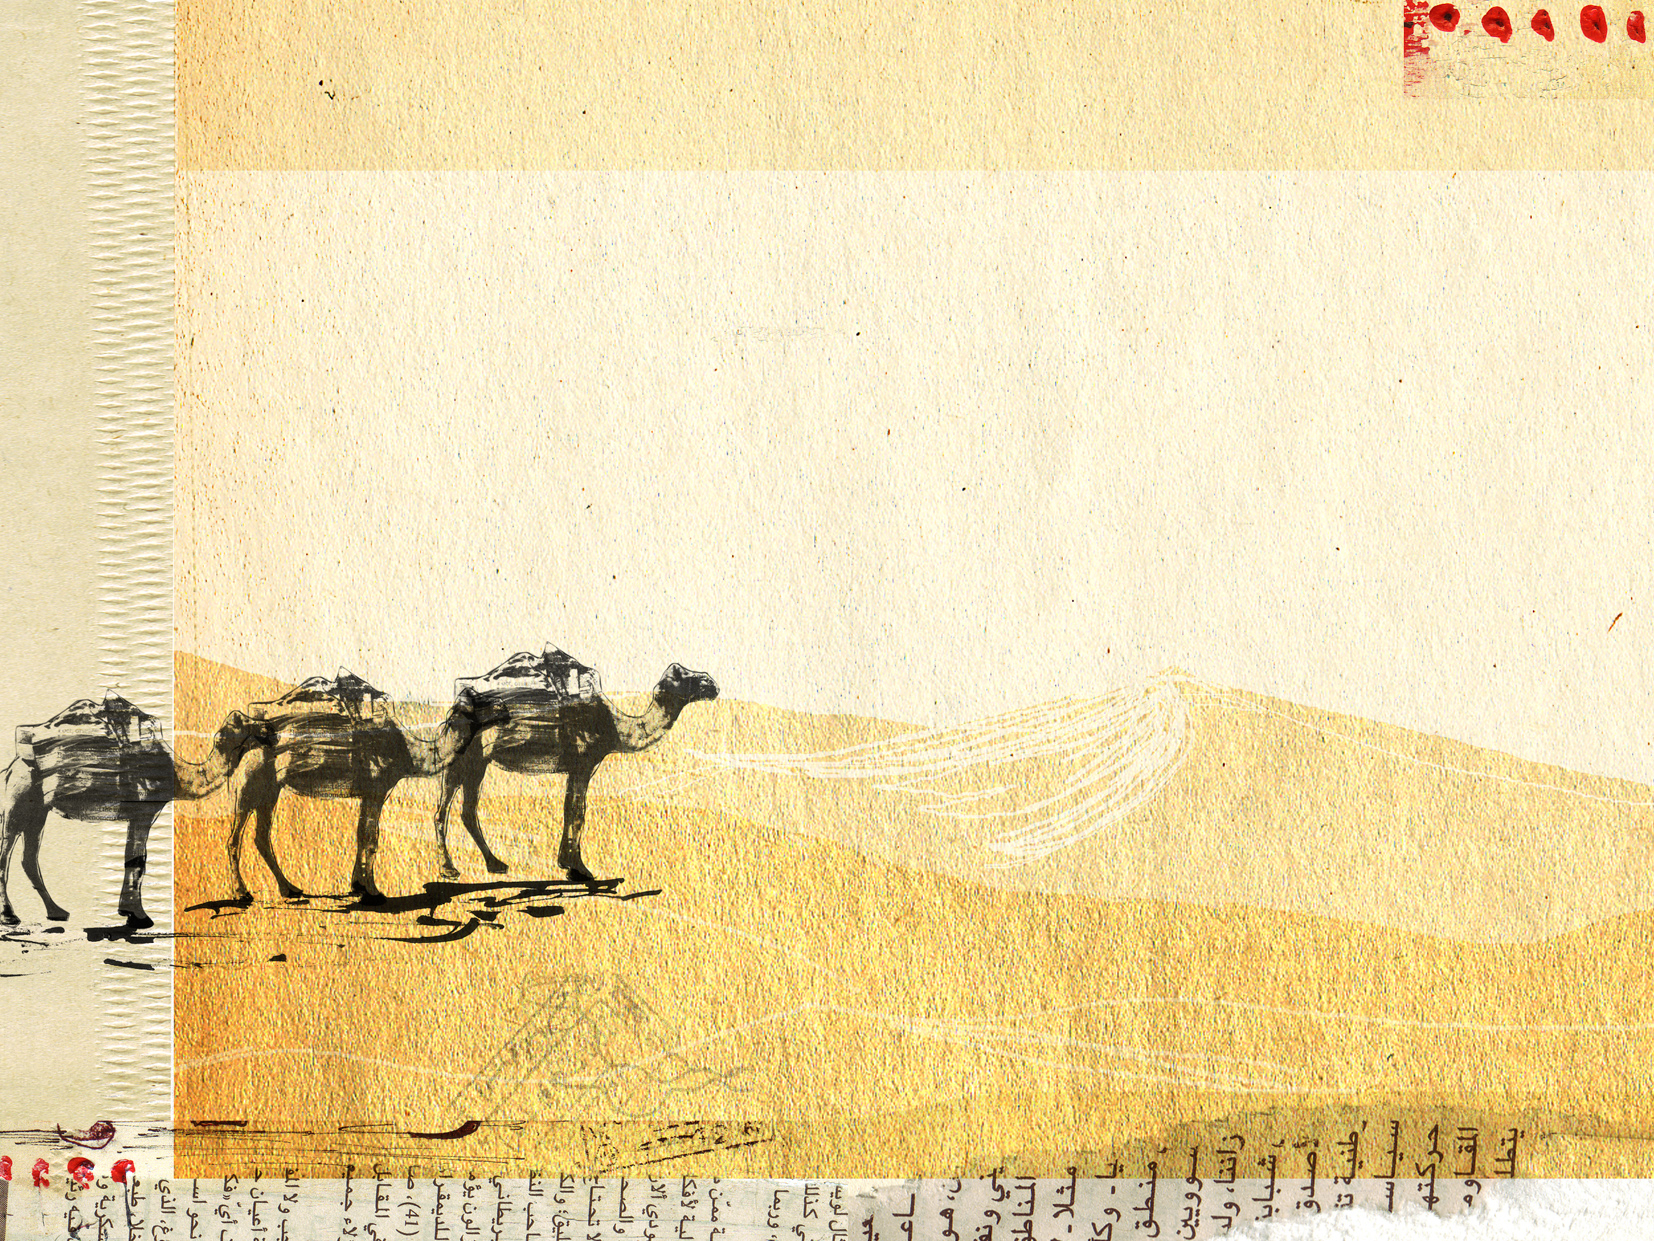 Camels of the Arabian Dessert